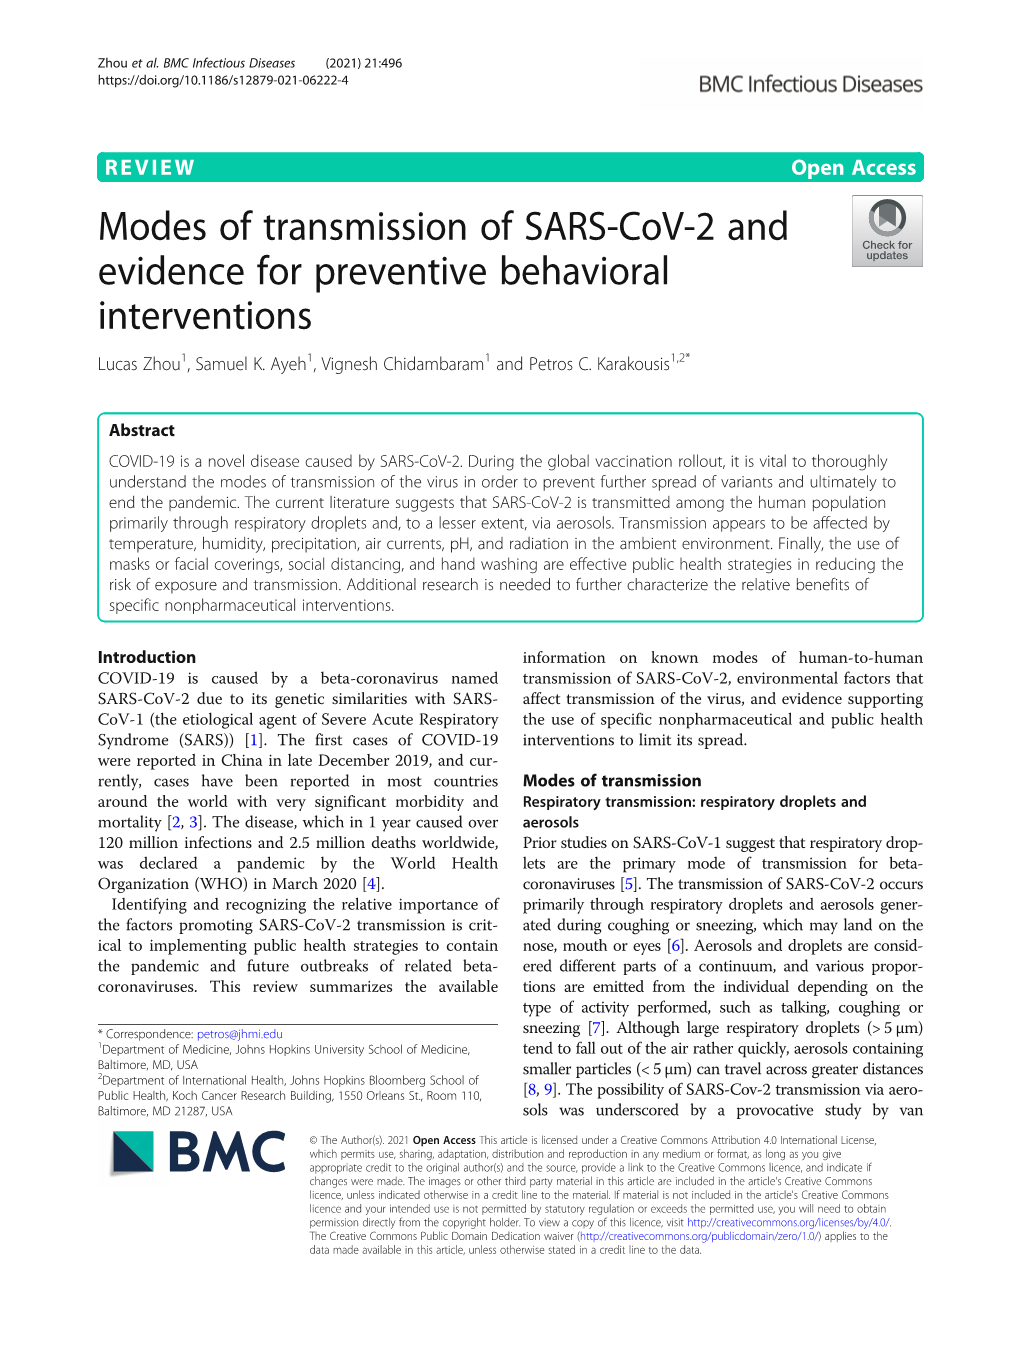 Modes of Transmission of SARS-Cov-2 and Evidence for Preventive Behavioral Interventions Lucas Zhou1, Samuel K